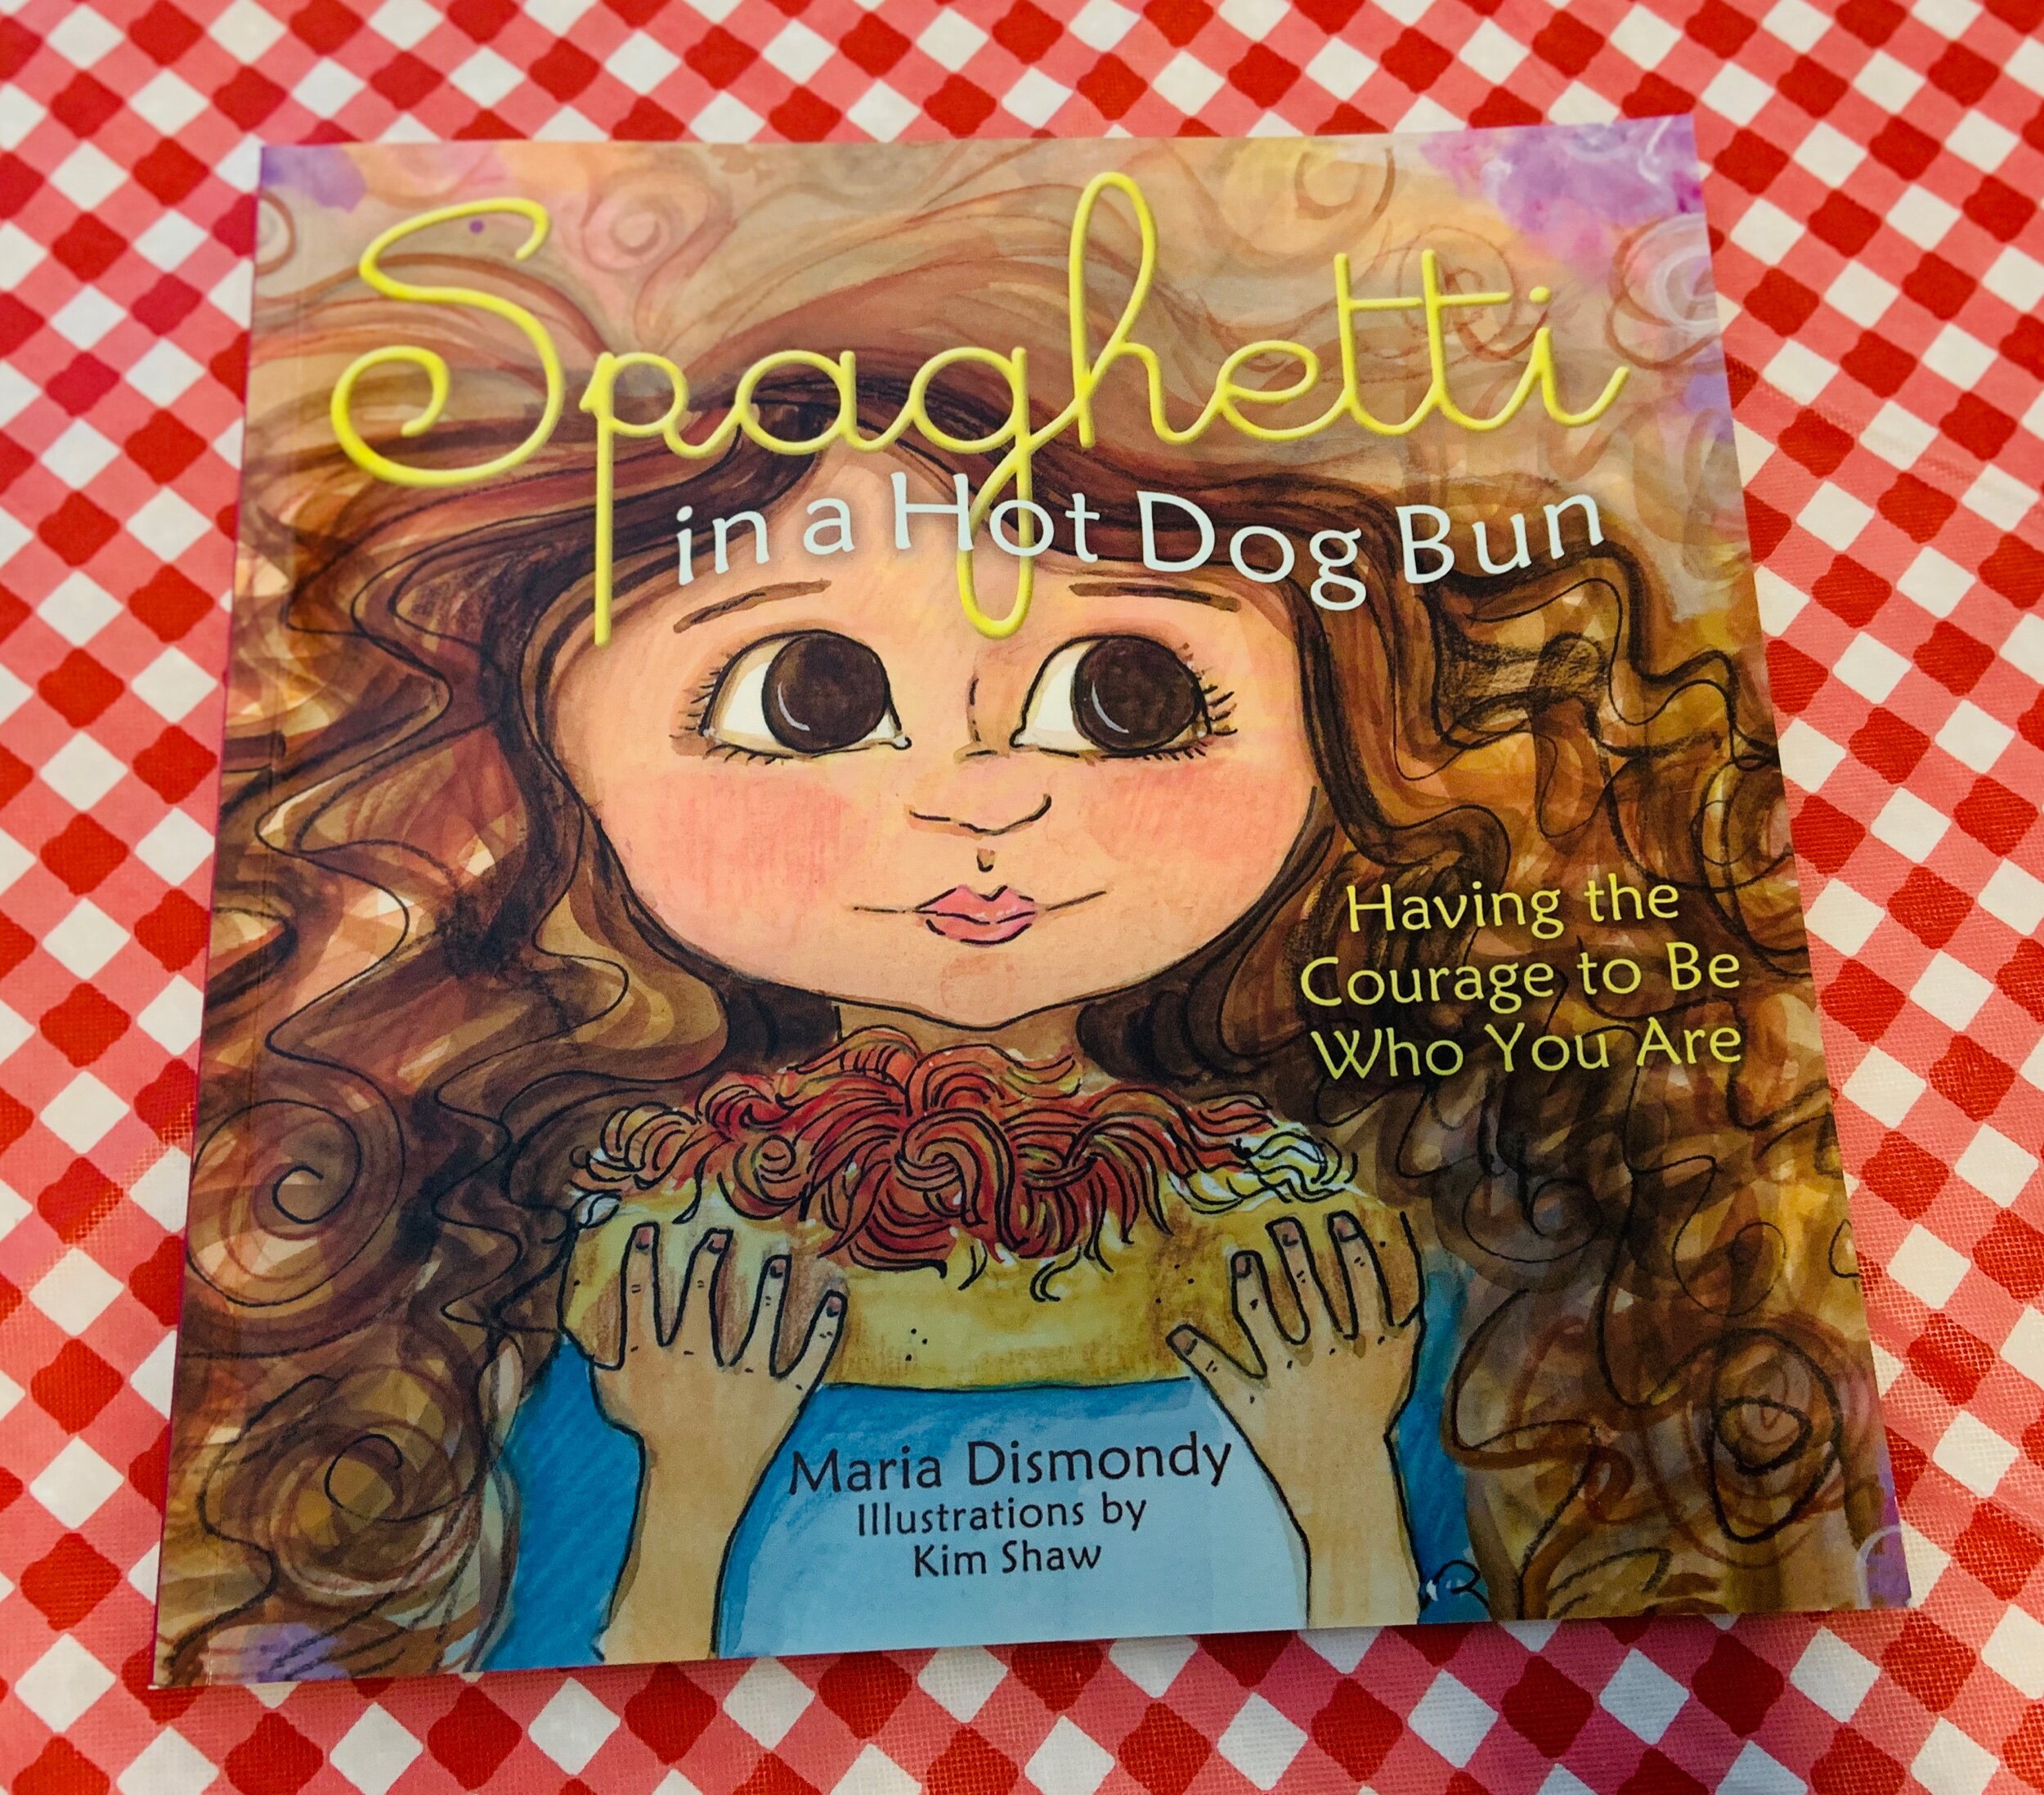 Spaghetti in a Hot Dog Bun by Maria Dismondy Illustrations by Kim Shaw